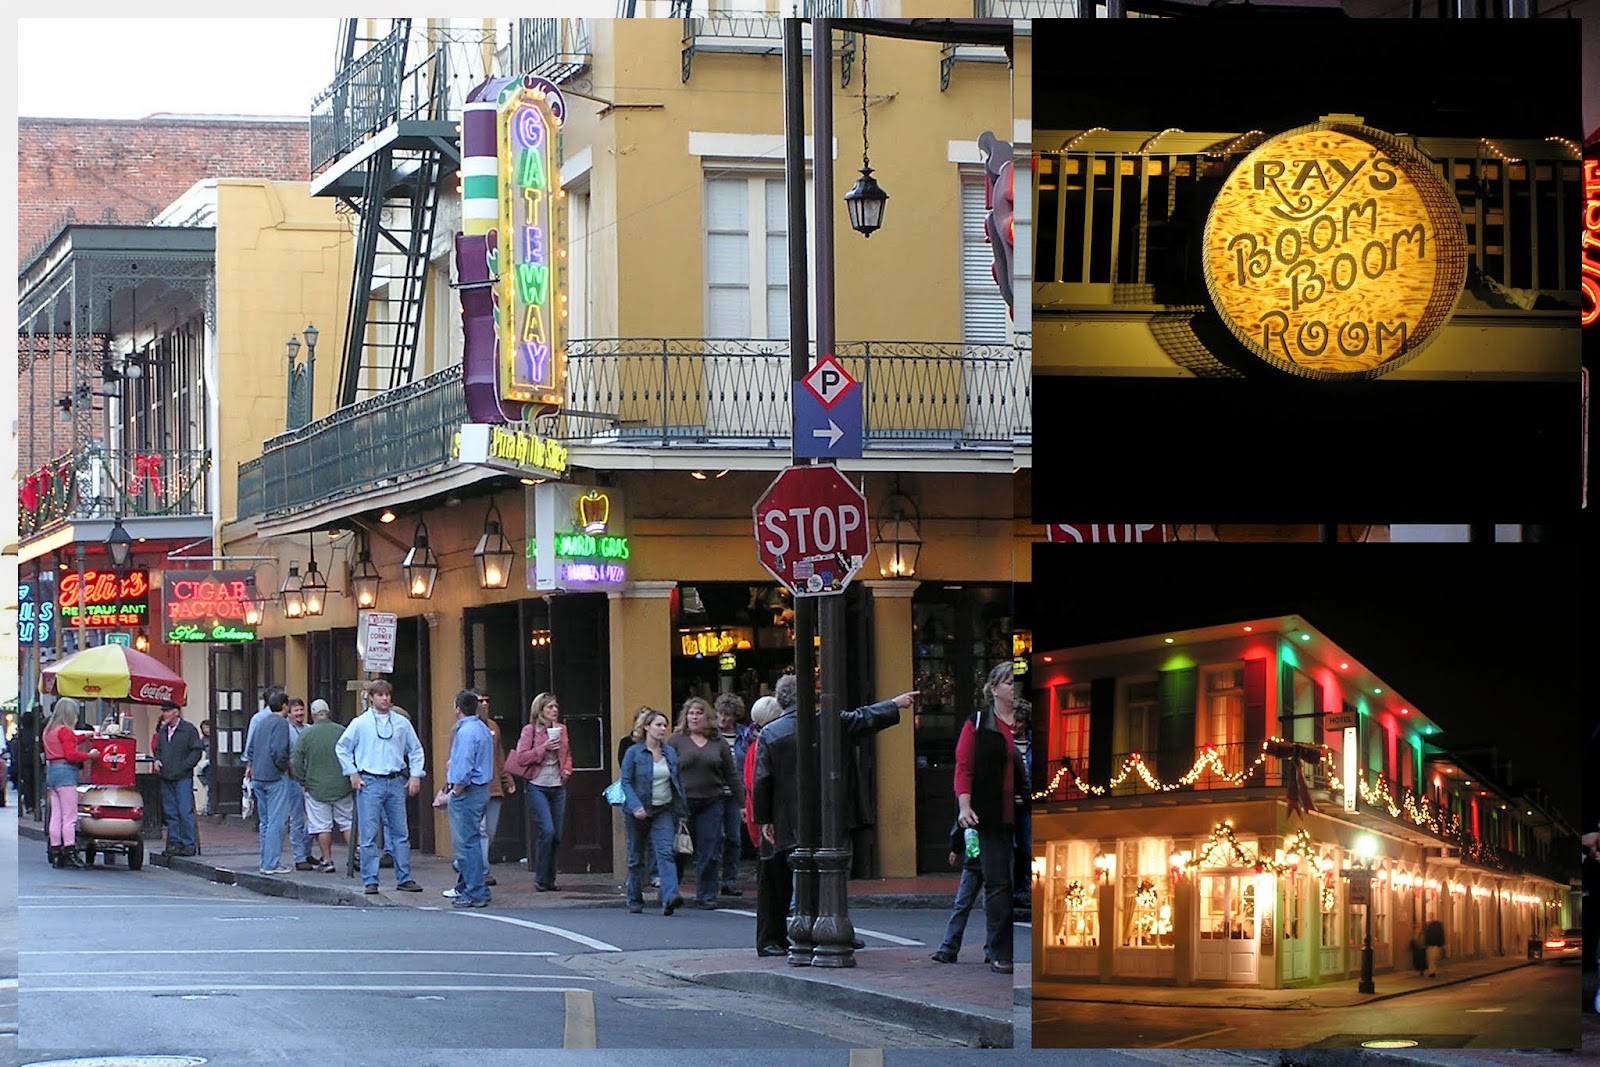 Bourbon Street - New Orleans